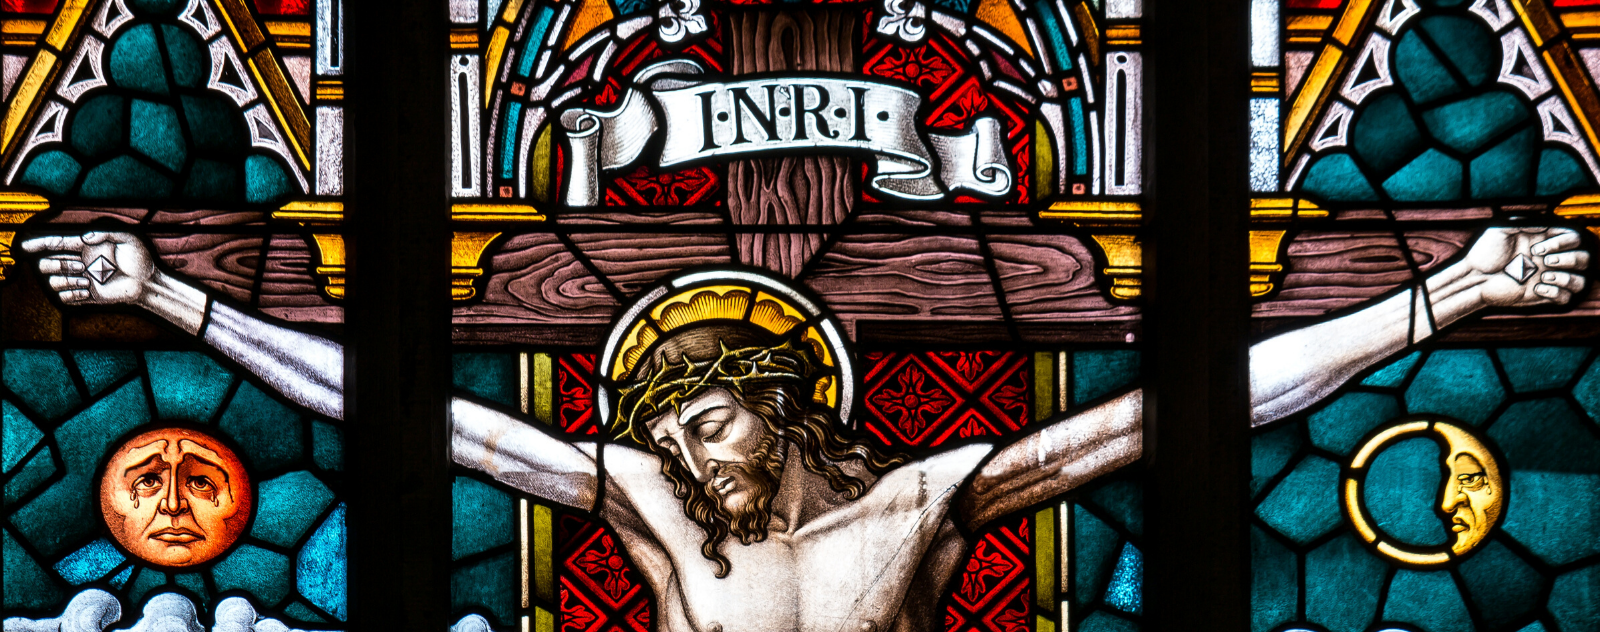 INRI Inscription on the Christian Cross